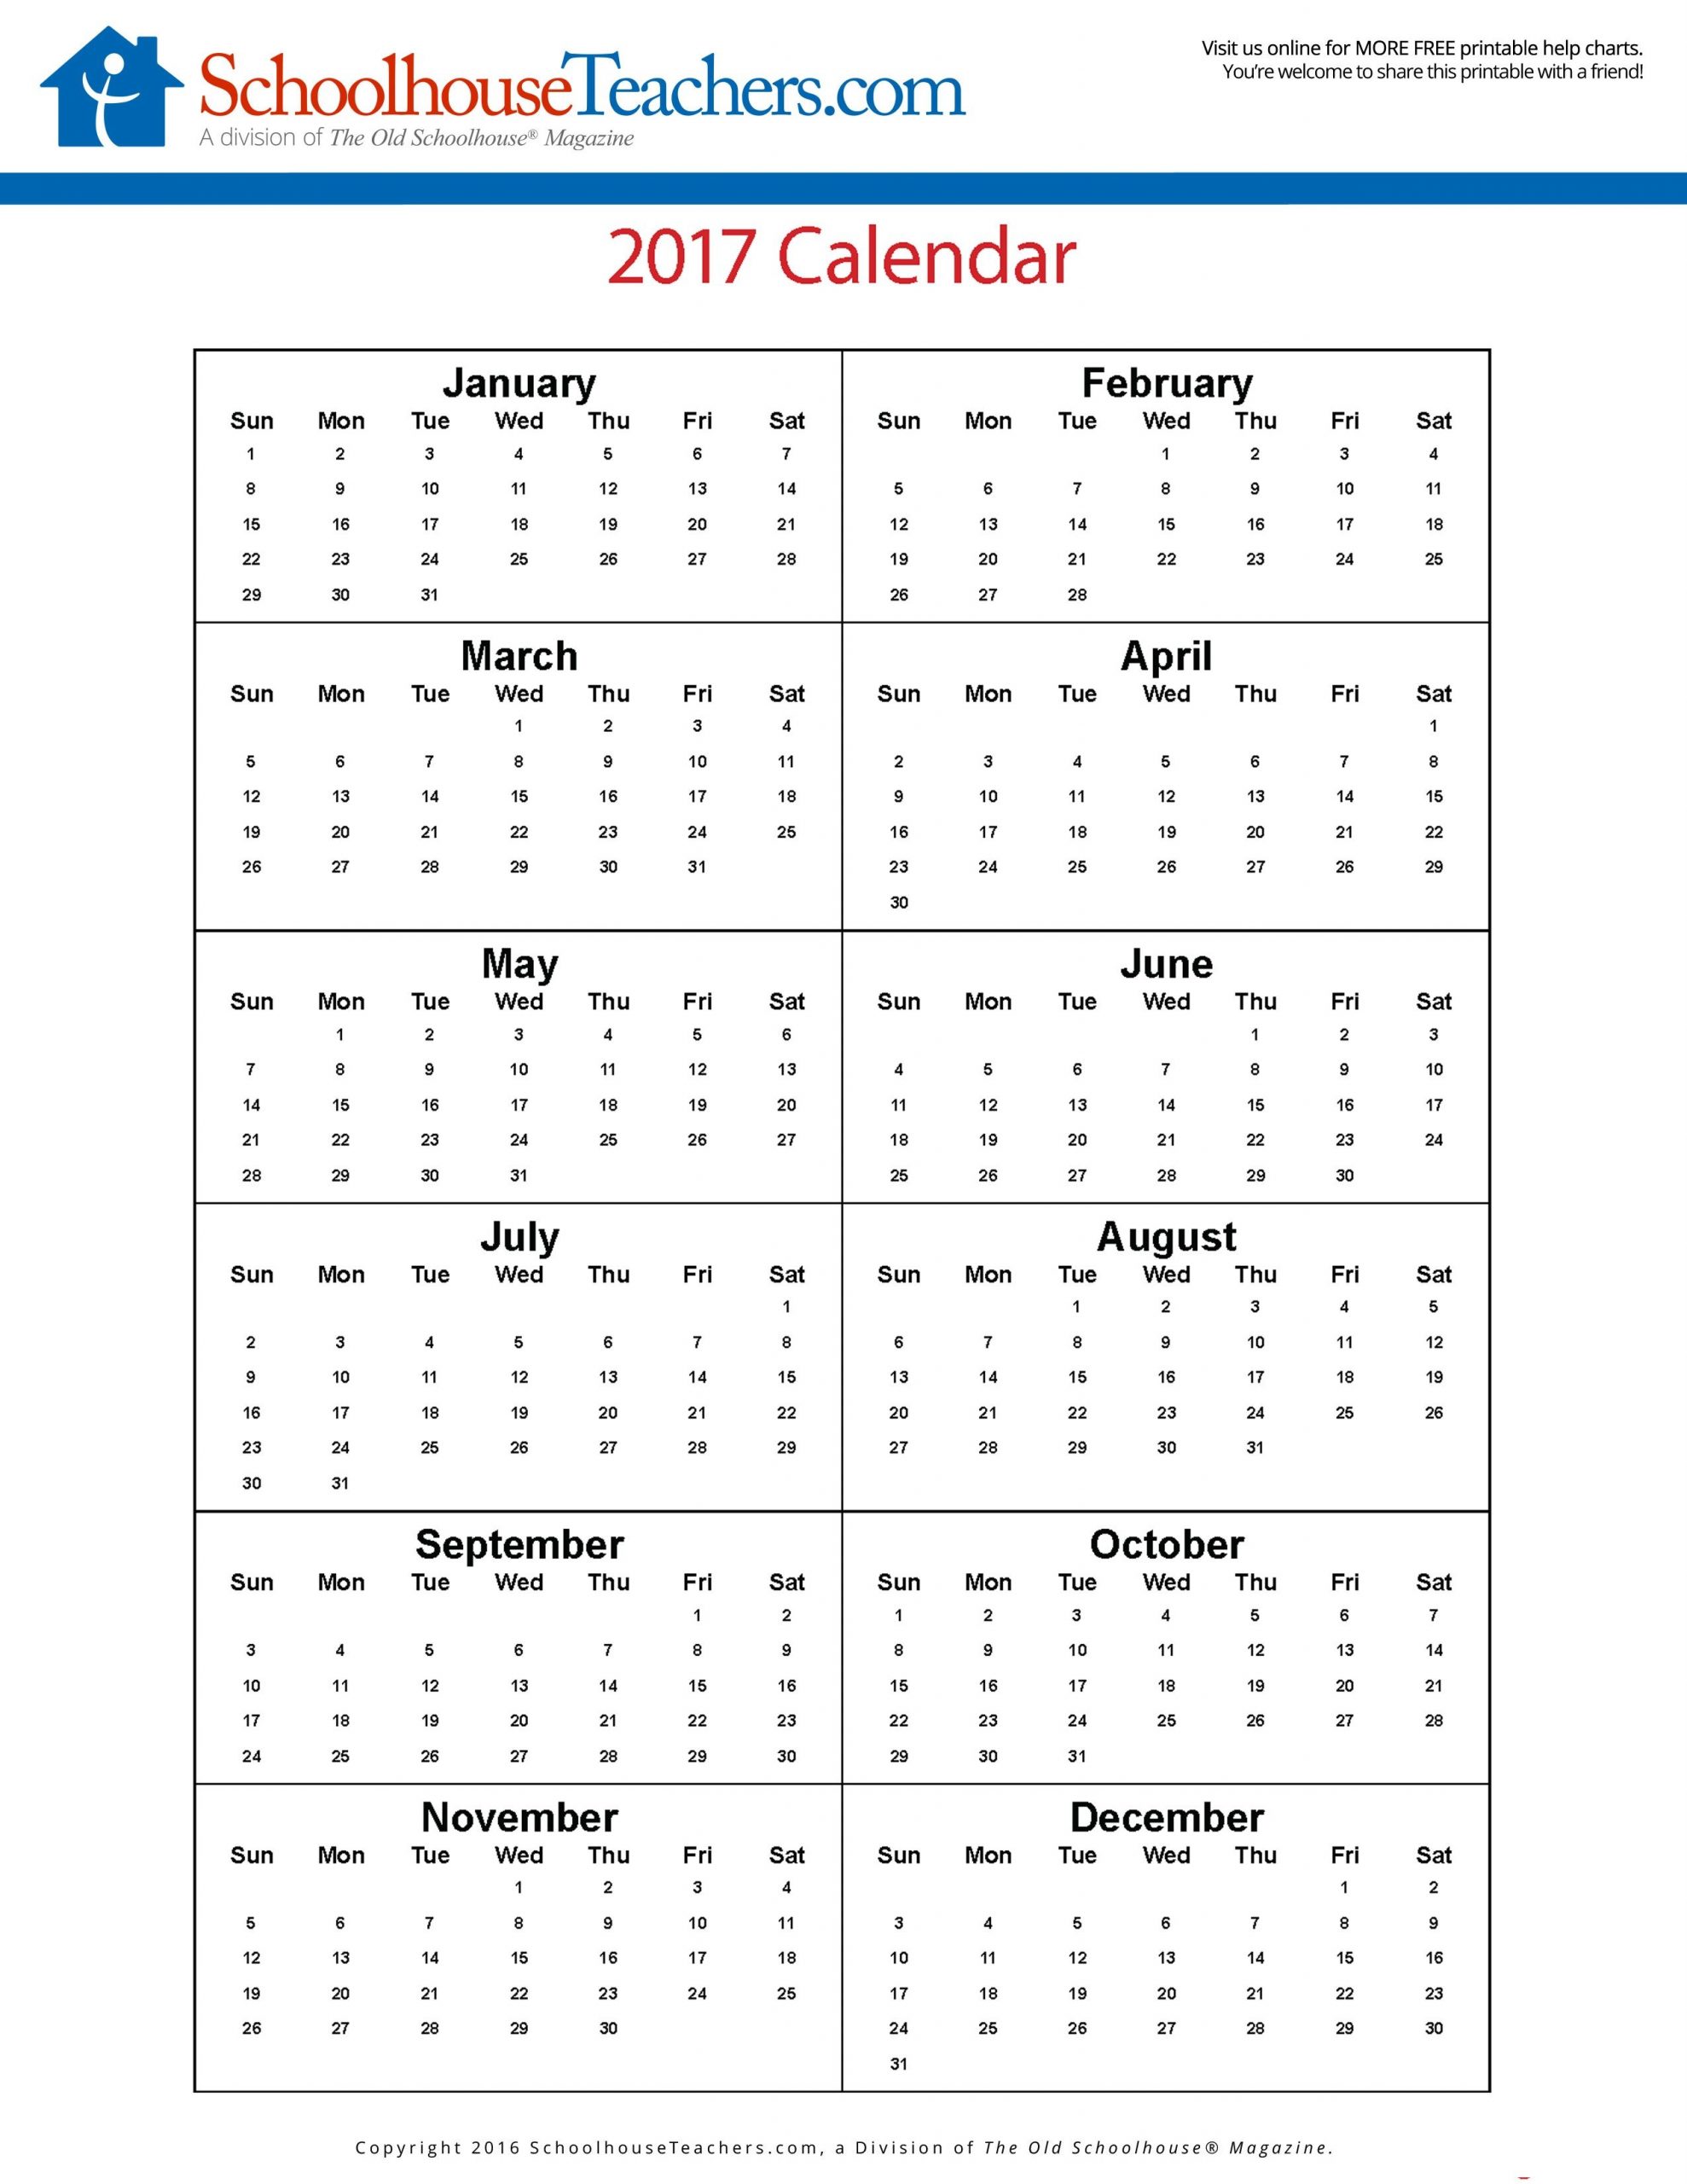 free printable calendars 2016/2017 schoolhouse teachers